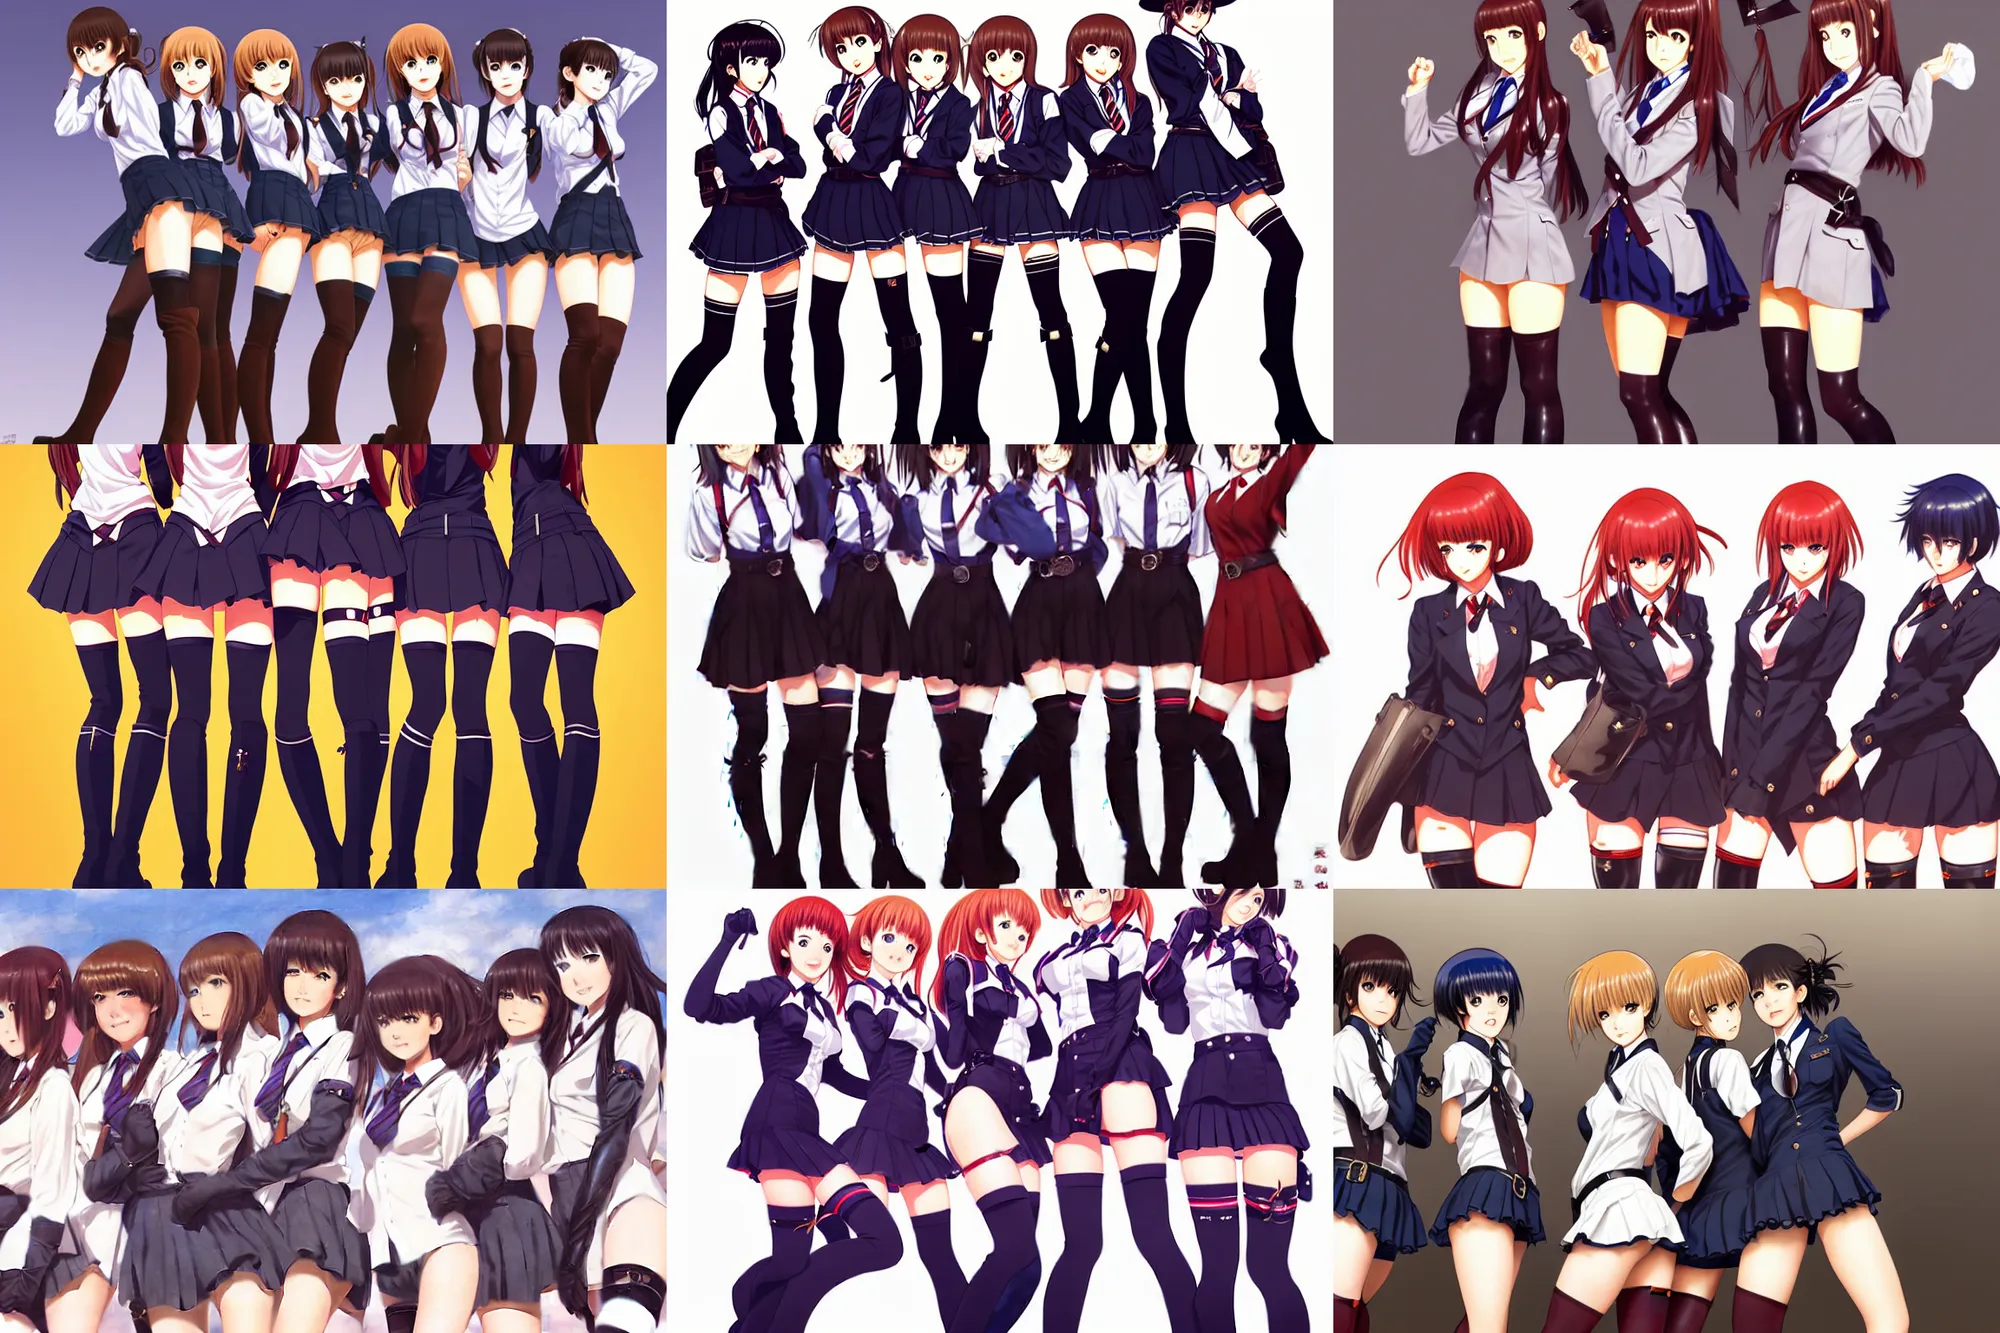 Prompt: close - up schoolgirls posing together in thigh boots. by takashi takeuchi, yoshiyuki sadamoto, amagaitaro, makoto shinkai, krenz cushart, asao urata, pixiv